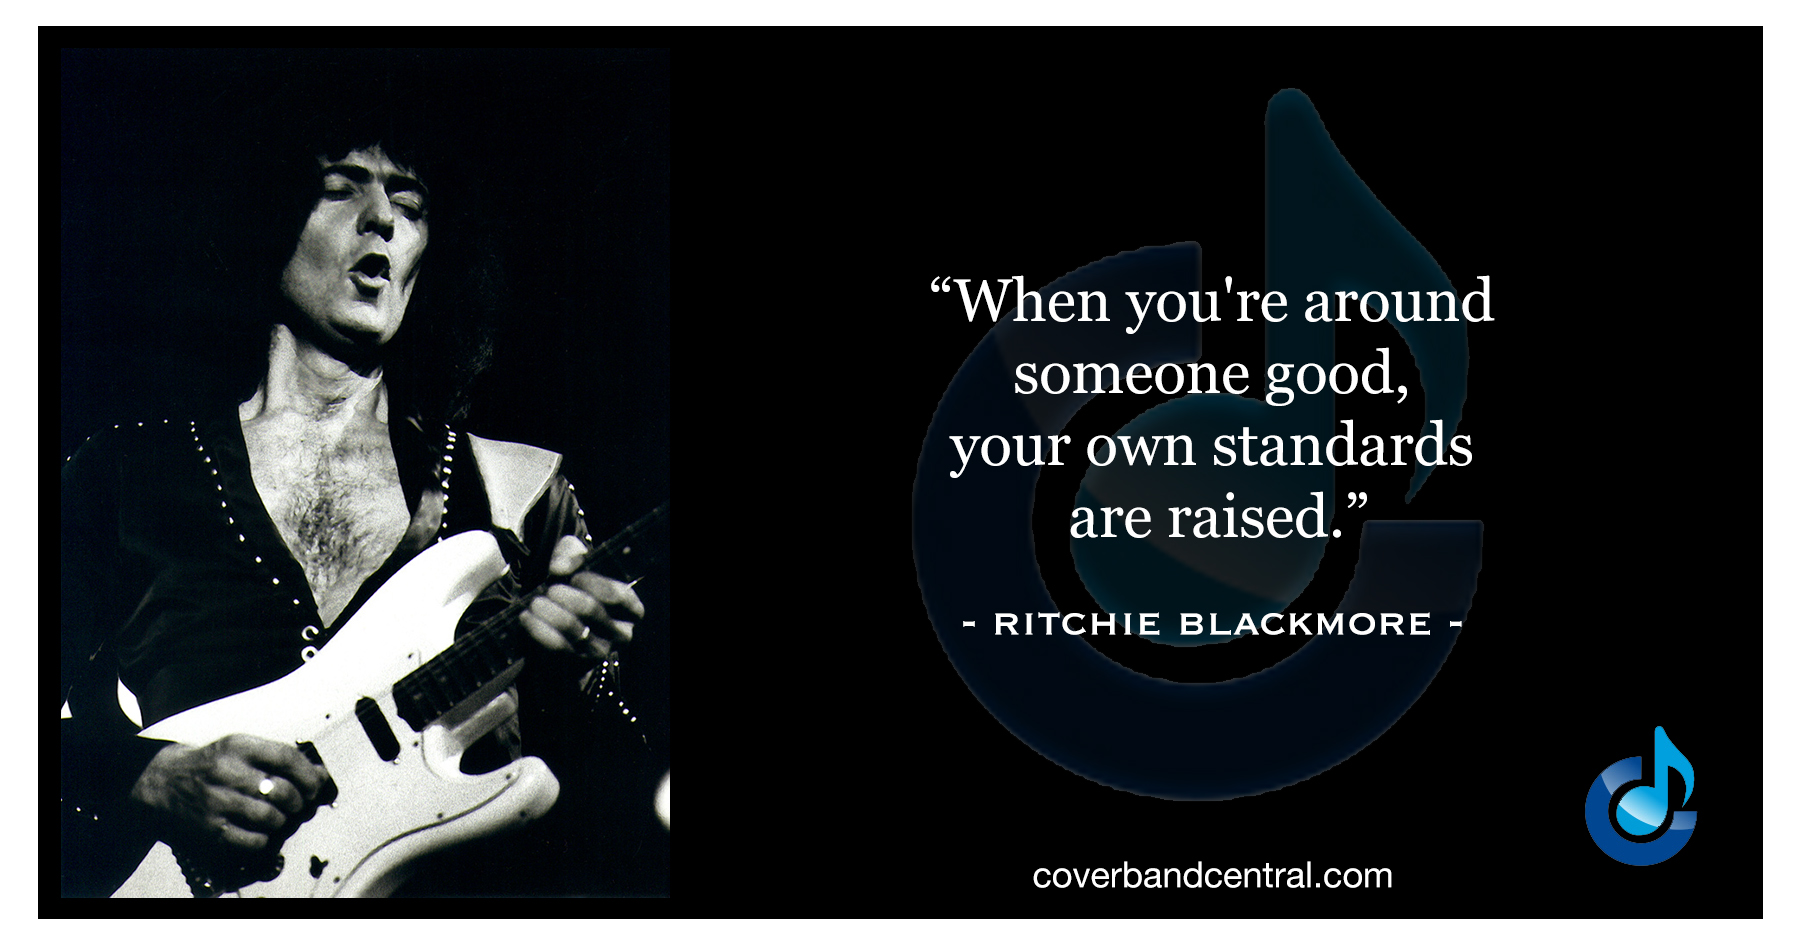 Ritchie Blackmore quote